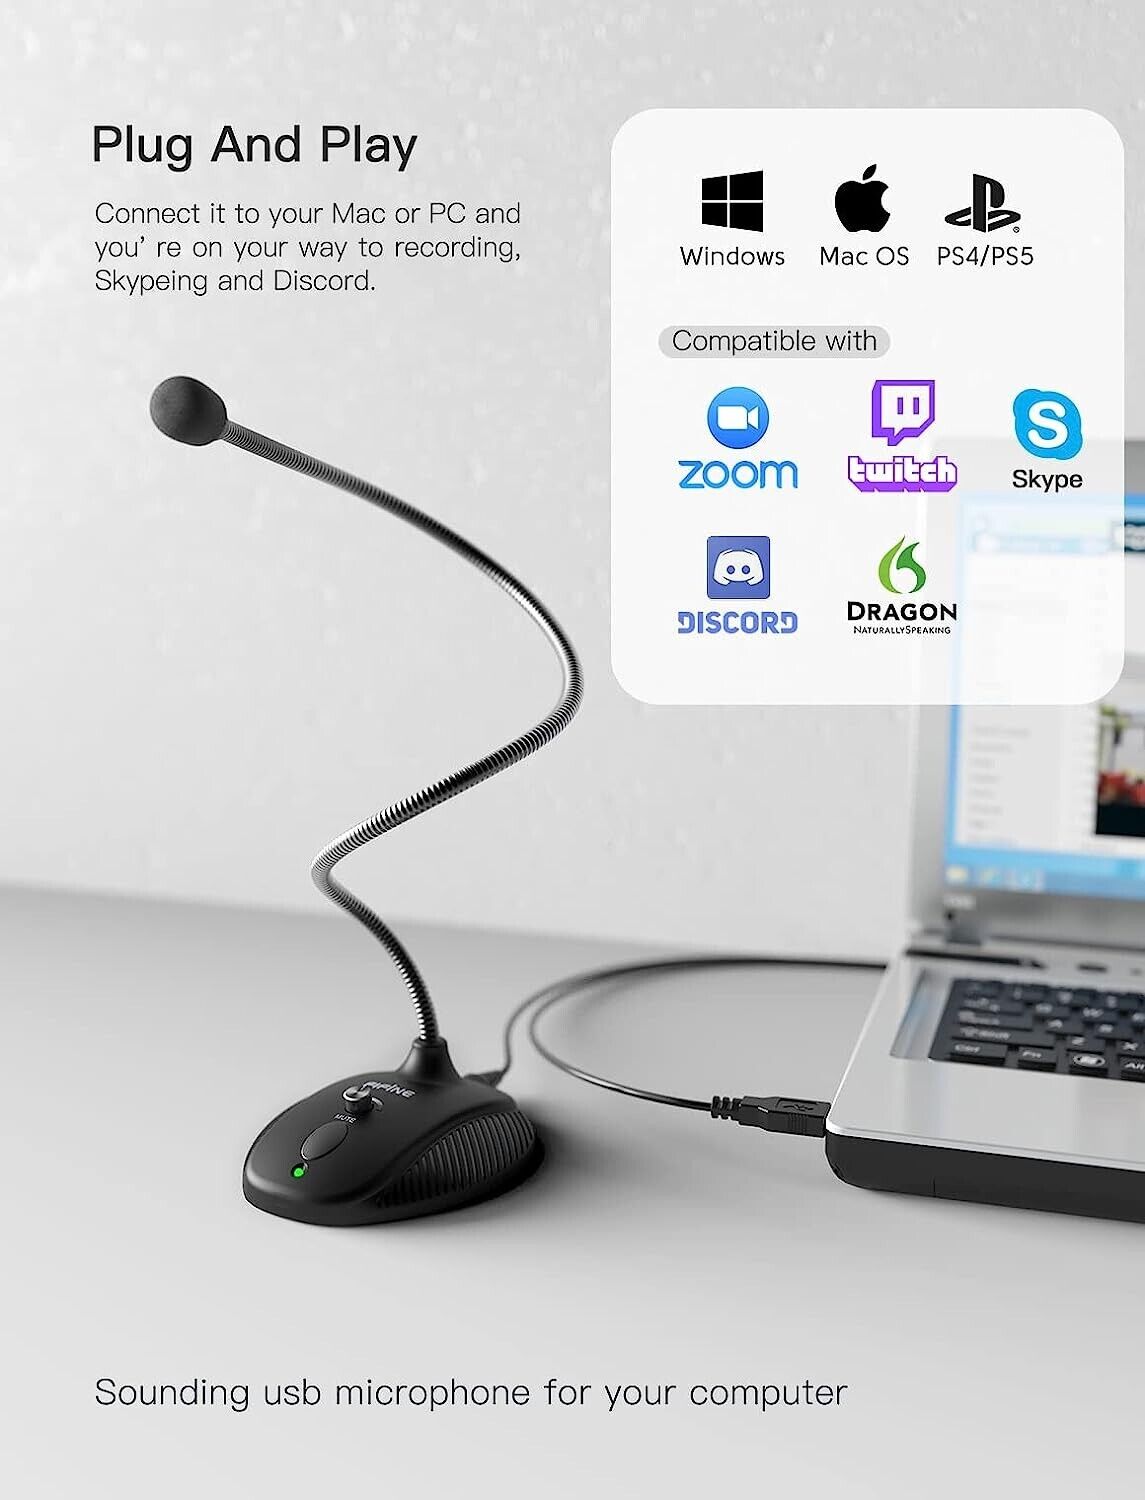 USB Computer Microphone, Plug &Play Desktop Condenser PC Laptop Mic,Mute Button